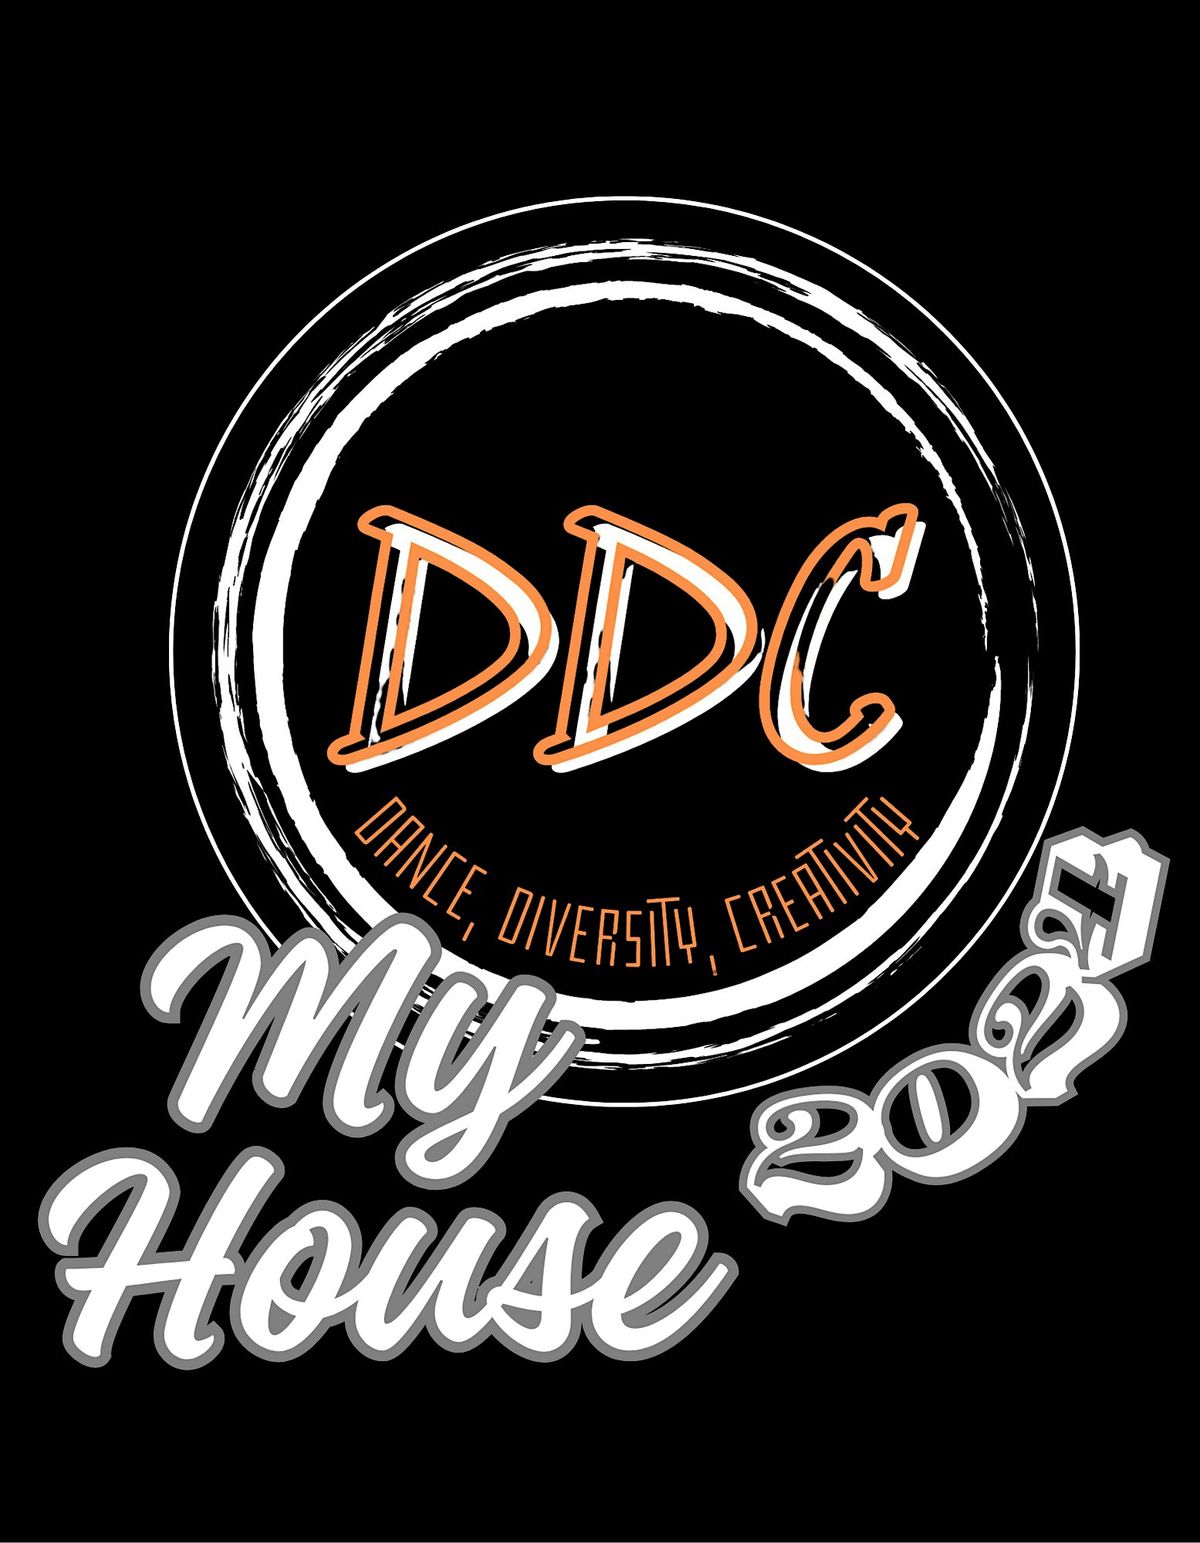 DDC Presents "My House"